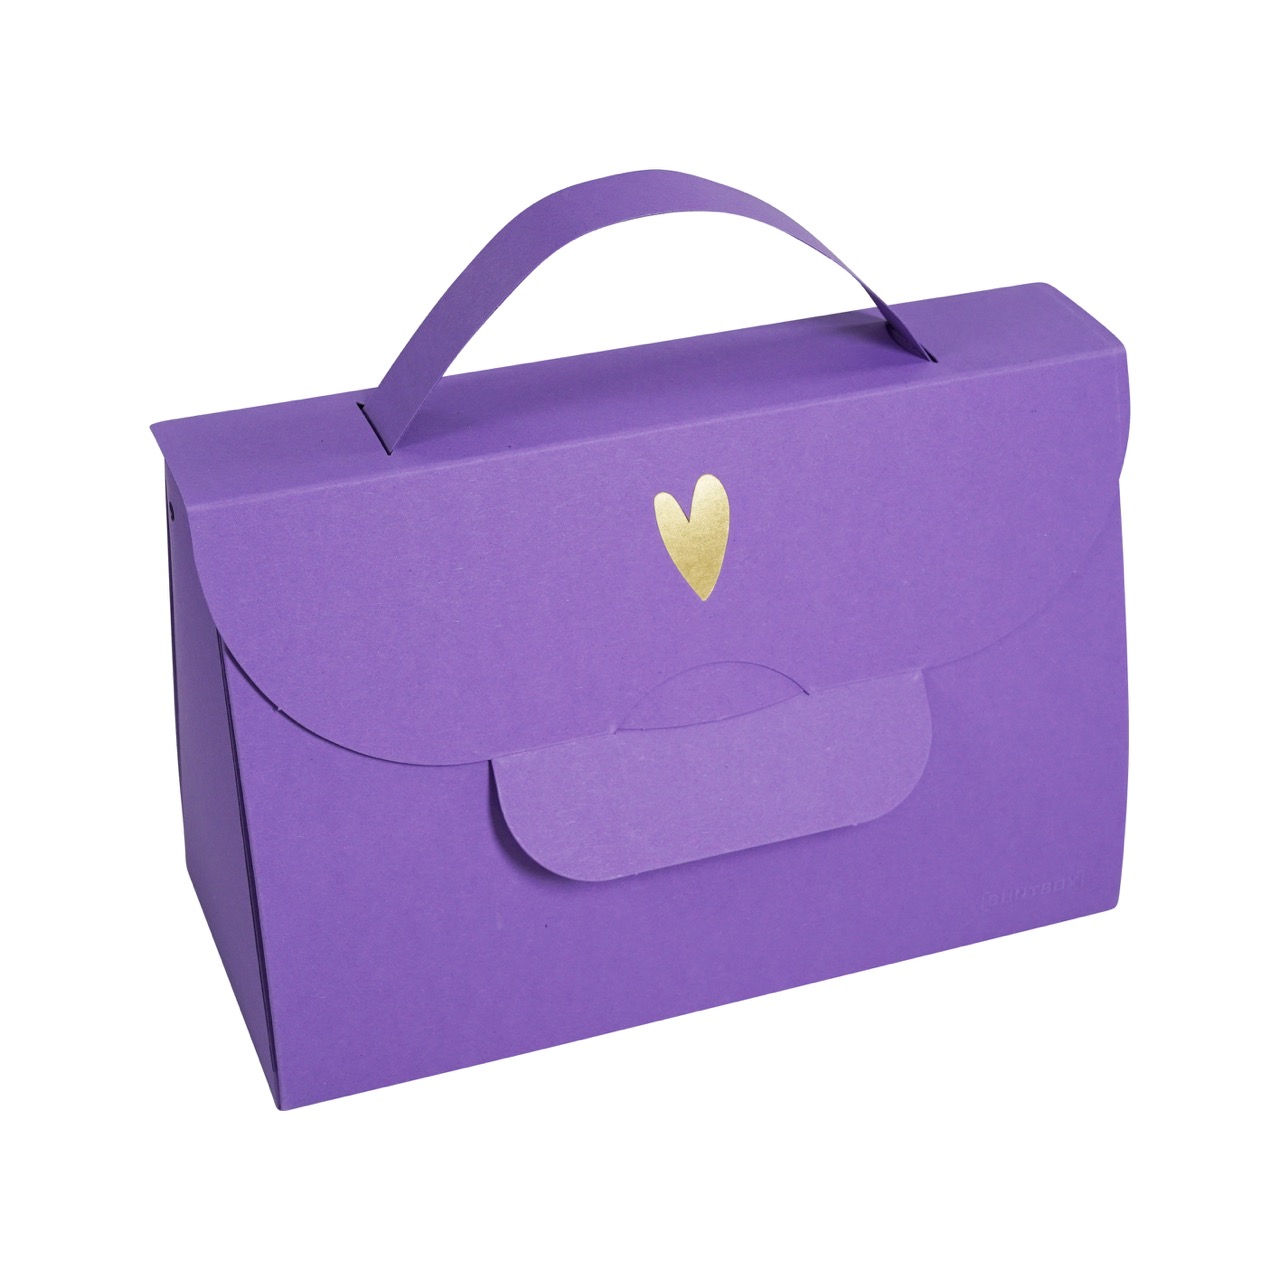 Buntbox Handbag XL Goldenes Herz in Lavendel